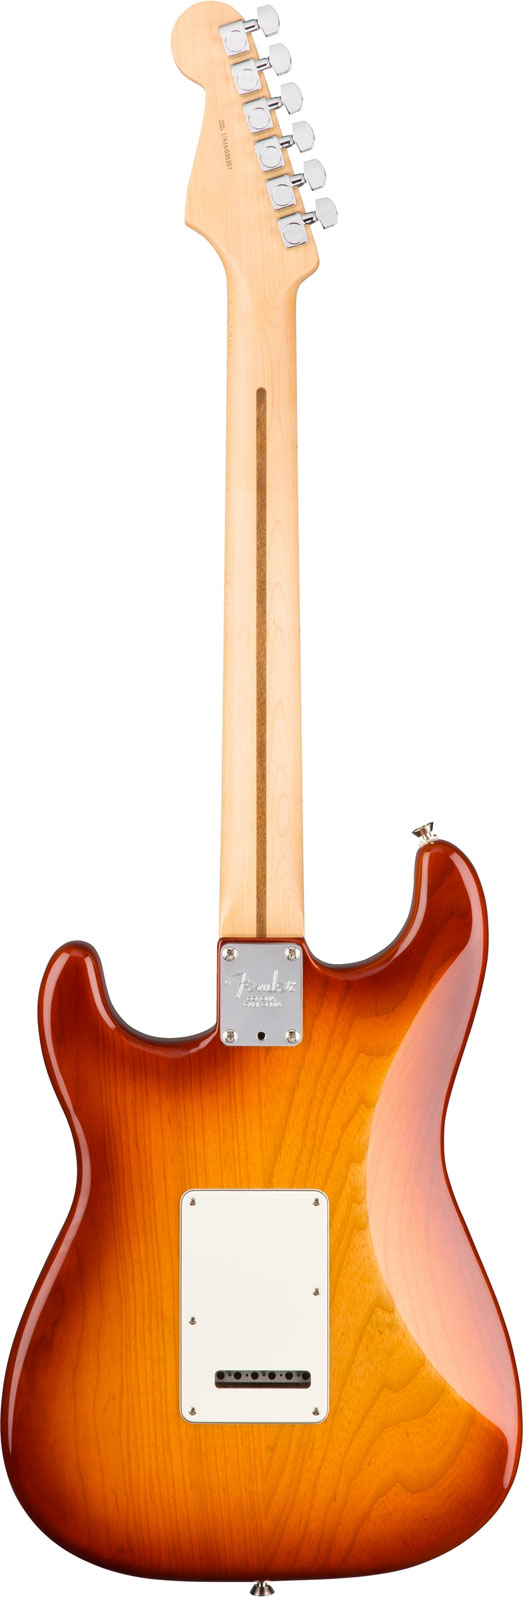 Fender Strat American Professional 2017 3s Usa Mn - Sienna Sunburst - Guitarra eléctrica con forma de str. - Variation 2